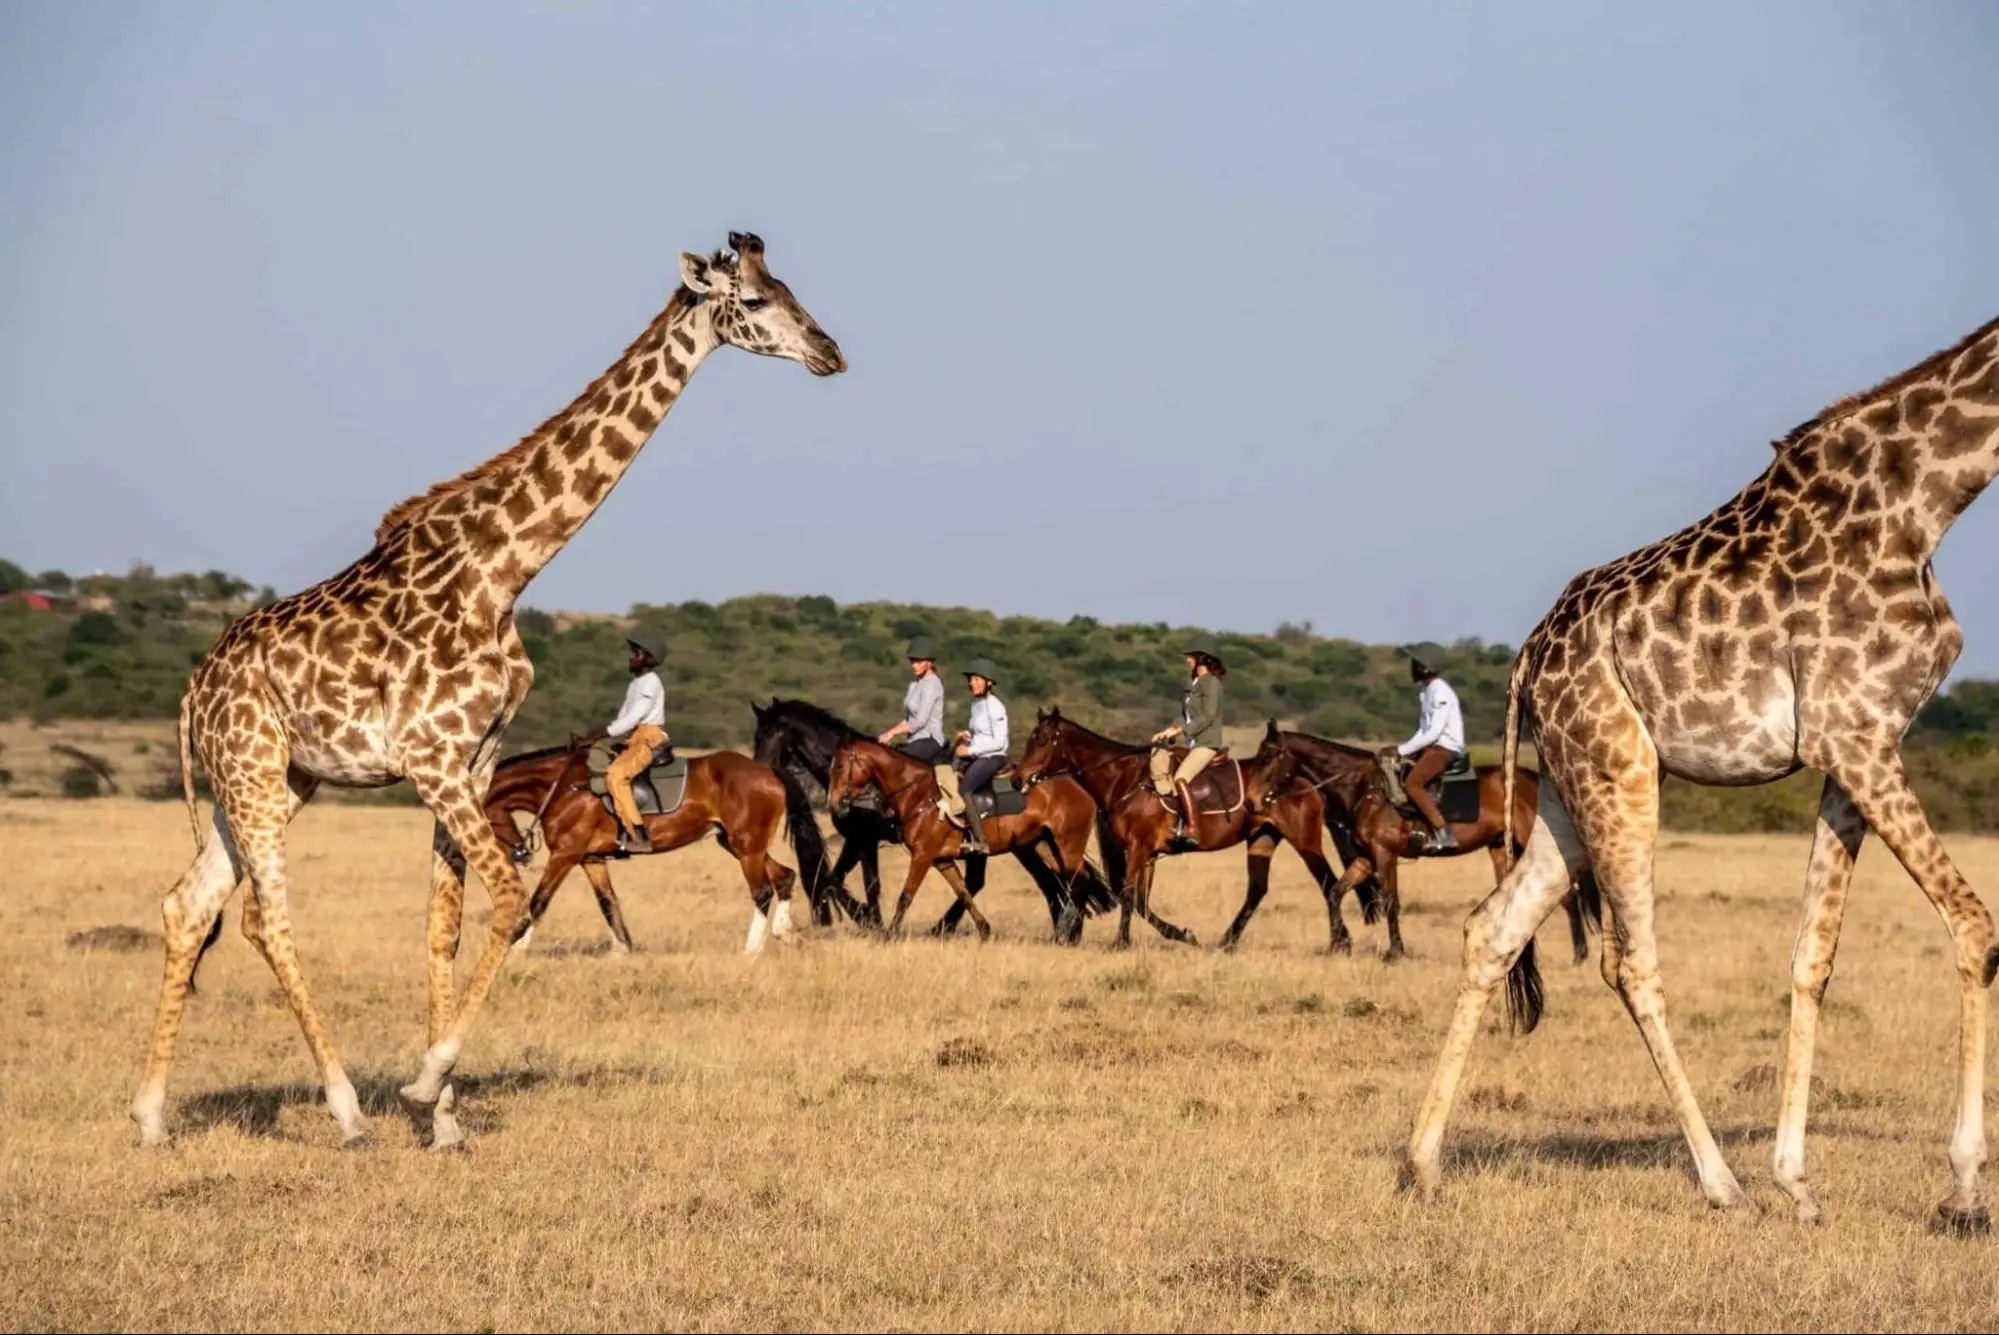 Kenya safari Masai Mara - our guest on horseback riding safaris.